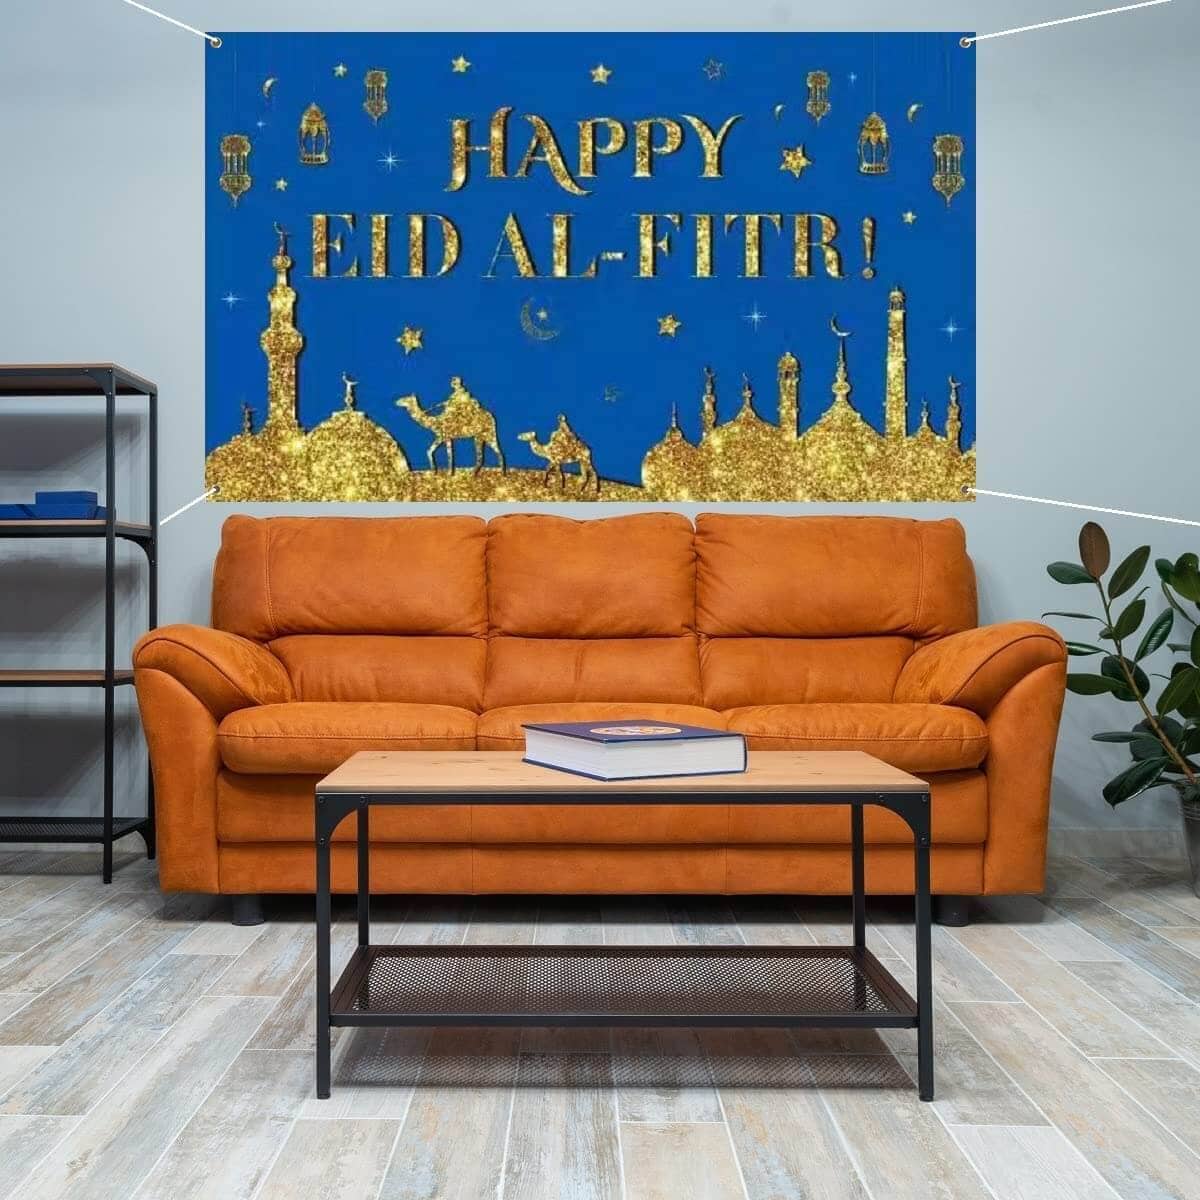 happy eid-al-fitr banner